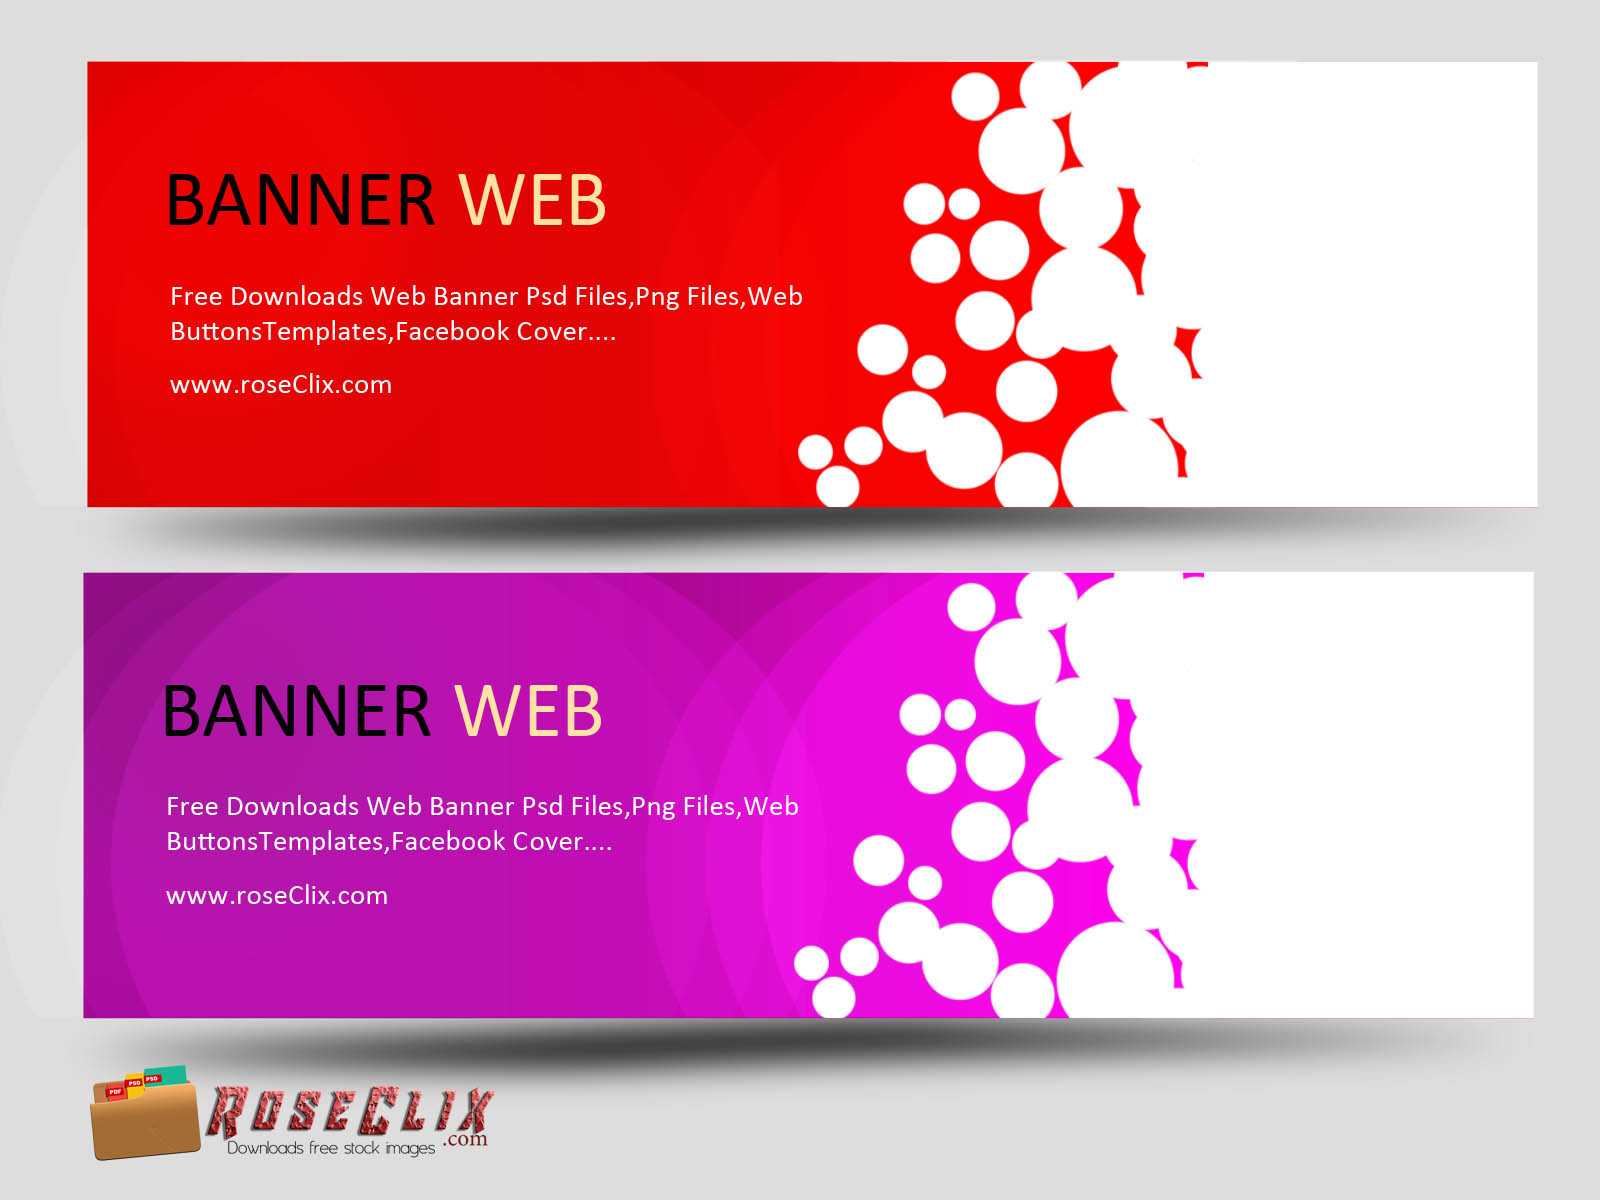 Web Design Banner Images Free Download - Yeppe With Website Banner Templates Free Download